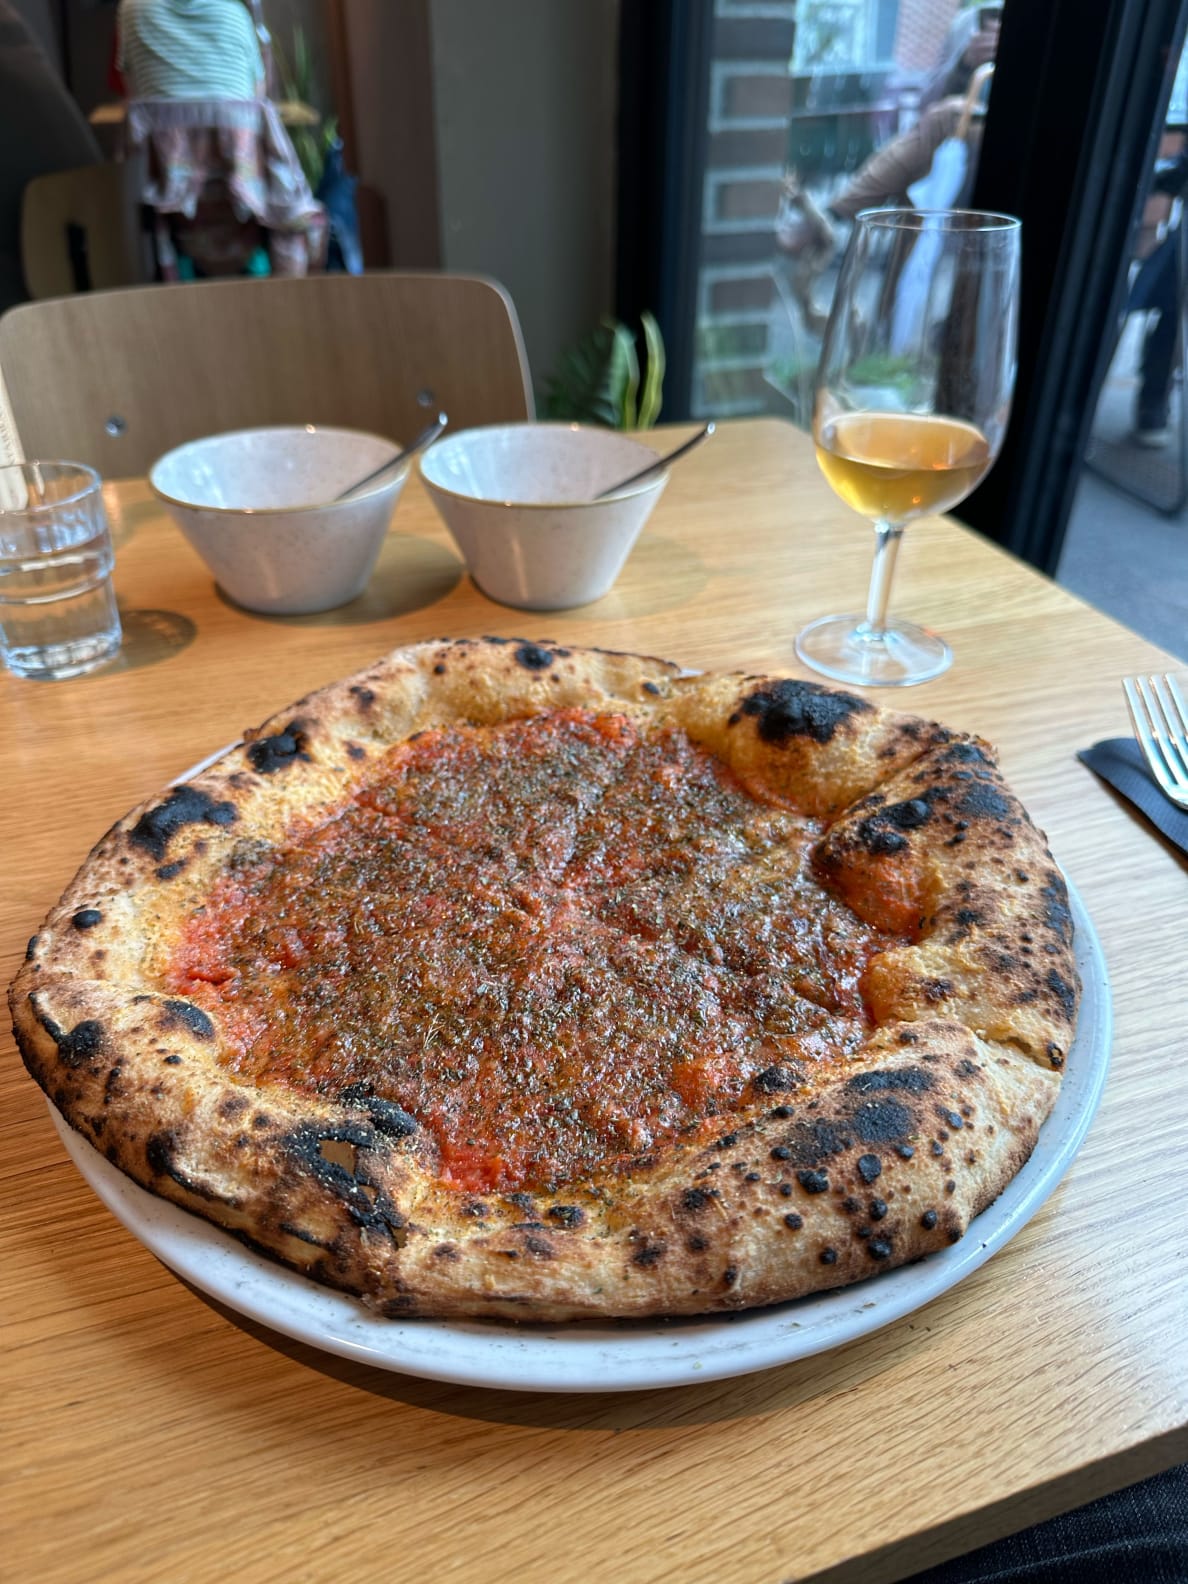 Rianata pizza pie at Surt in Copenhagen.